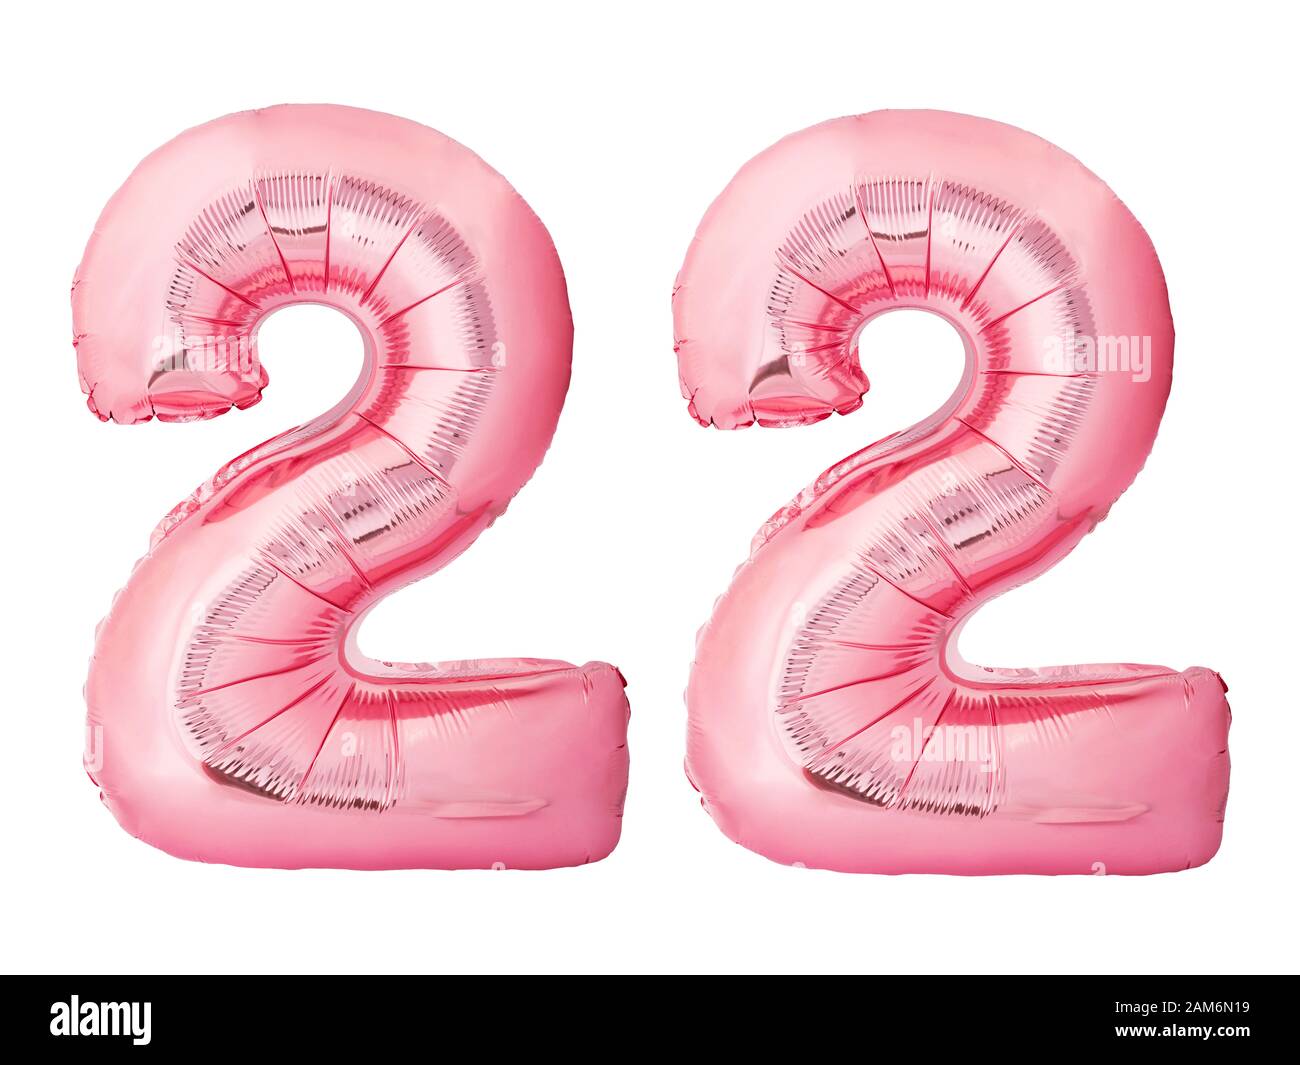 Número 22 veintidós hechos de globos inflables de oro rosa aislado sobre fondo blanco Foto de stock